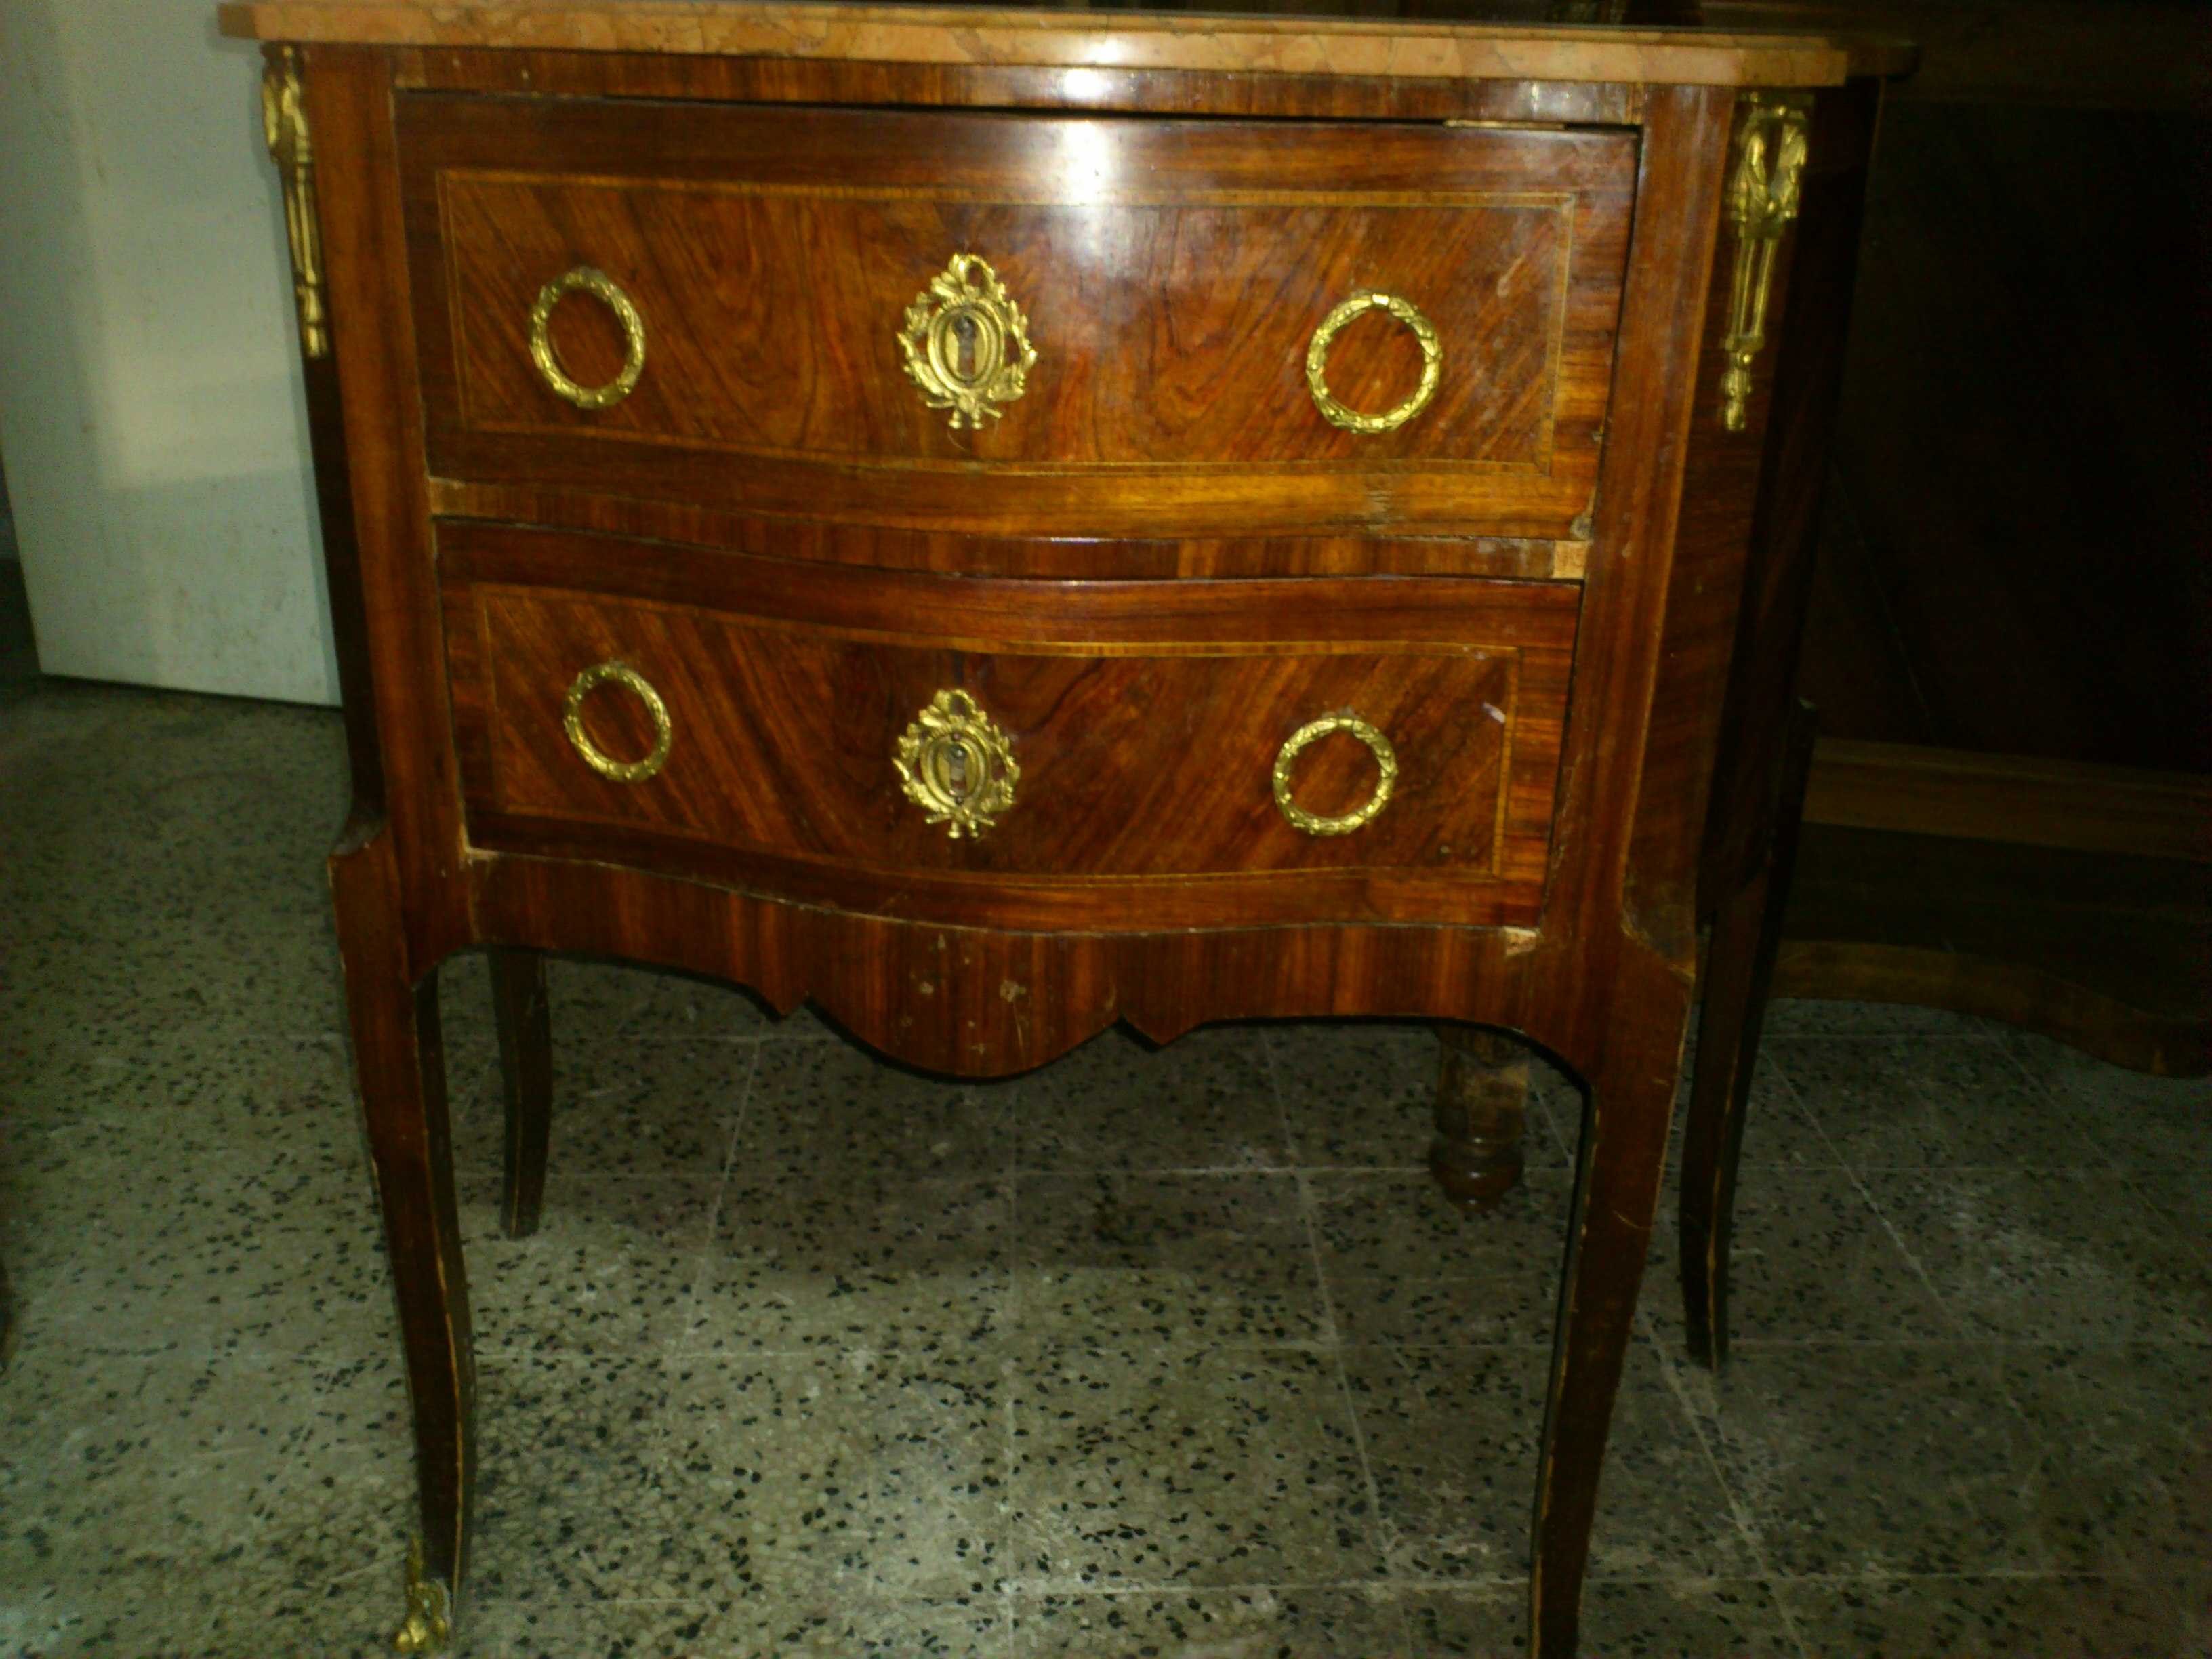 Commode napoleone iii arredamento mobili antiquariato for Arredamento d antiquariato ebay